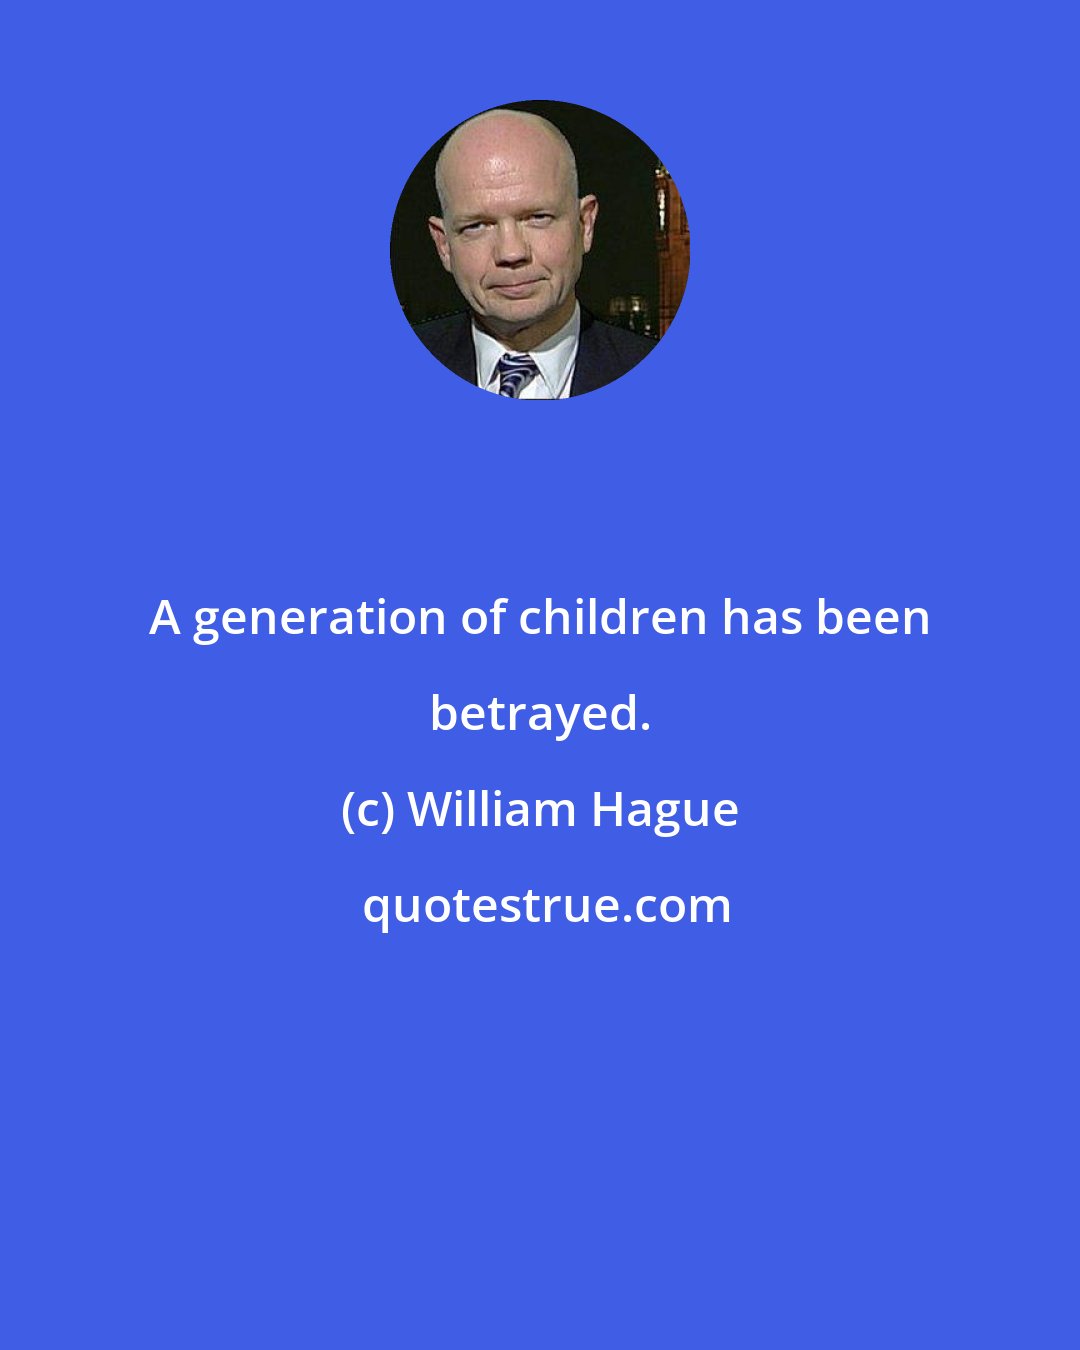 William Hague: A generation of children has been betrayed.